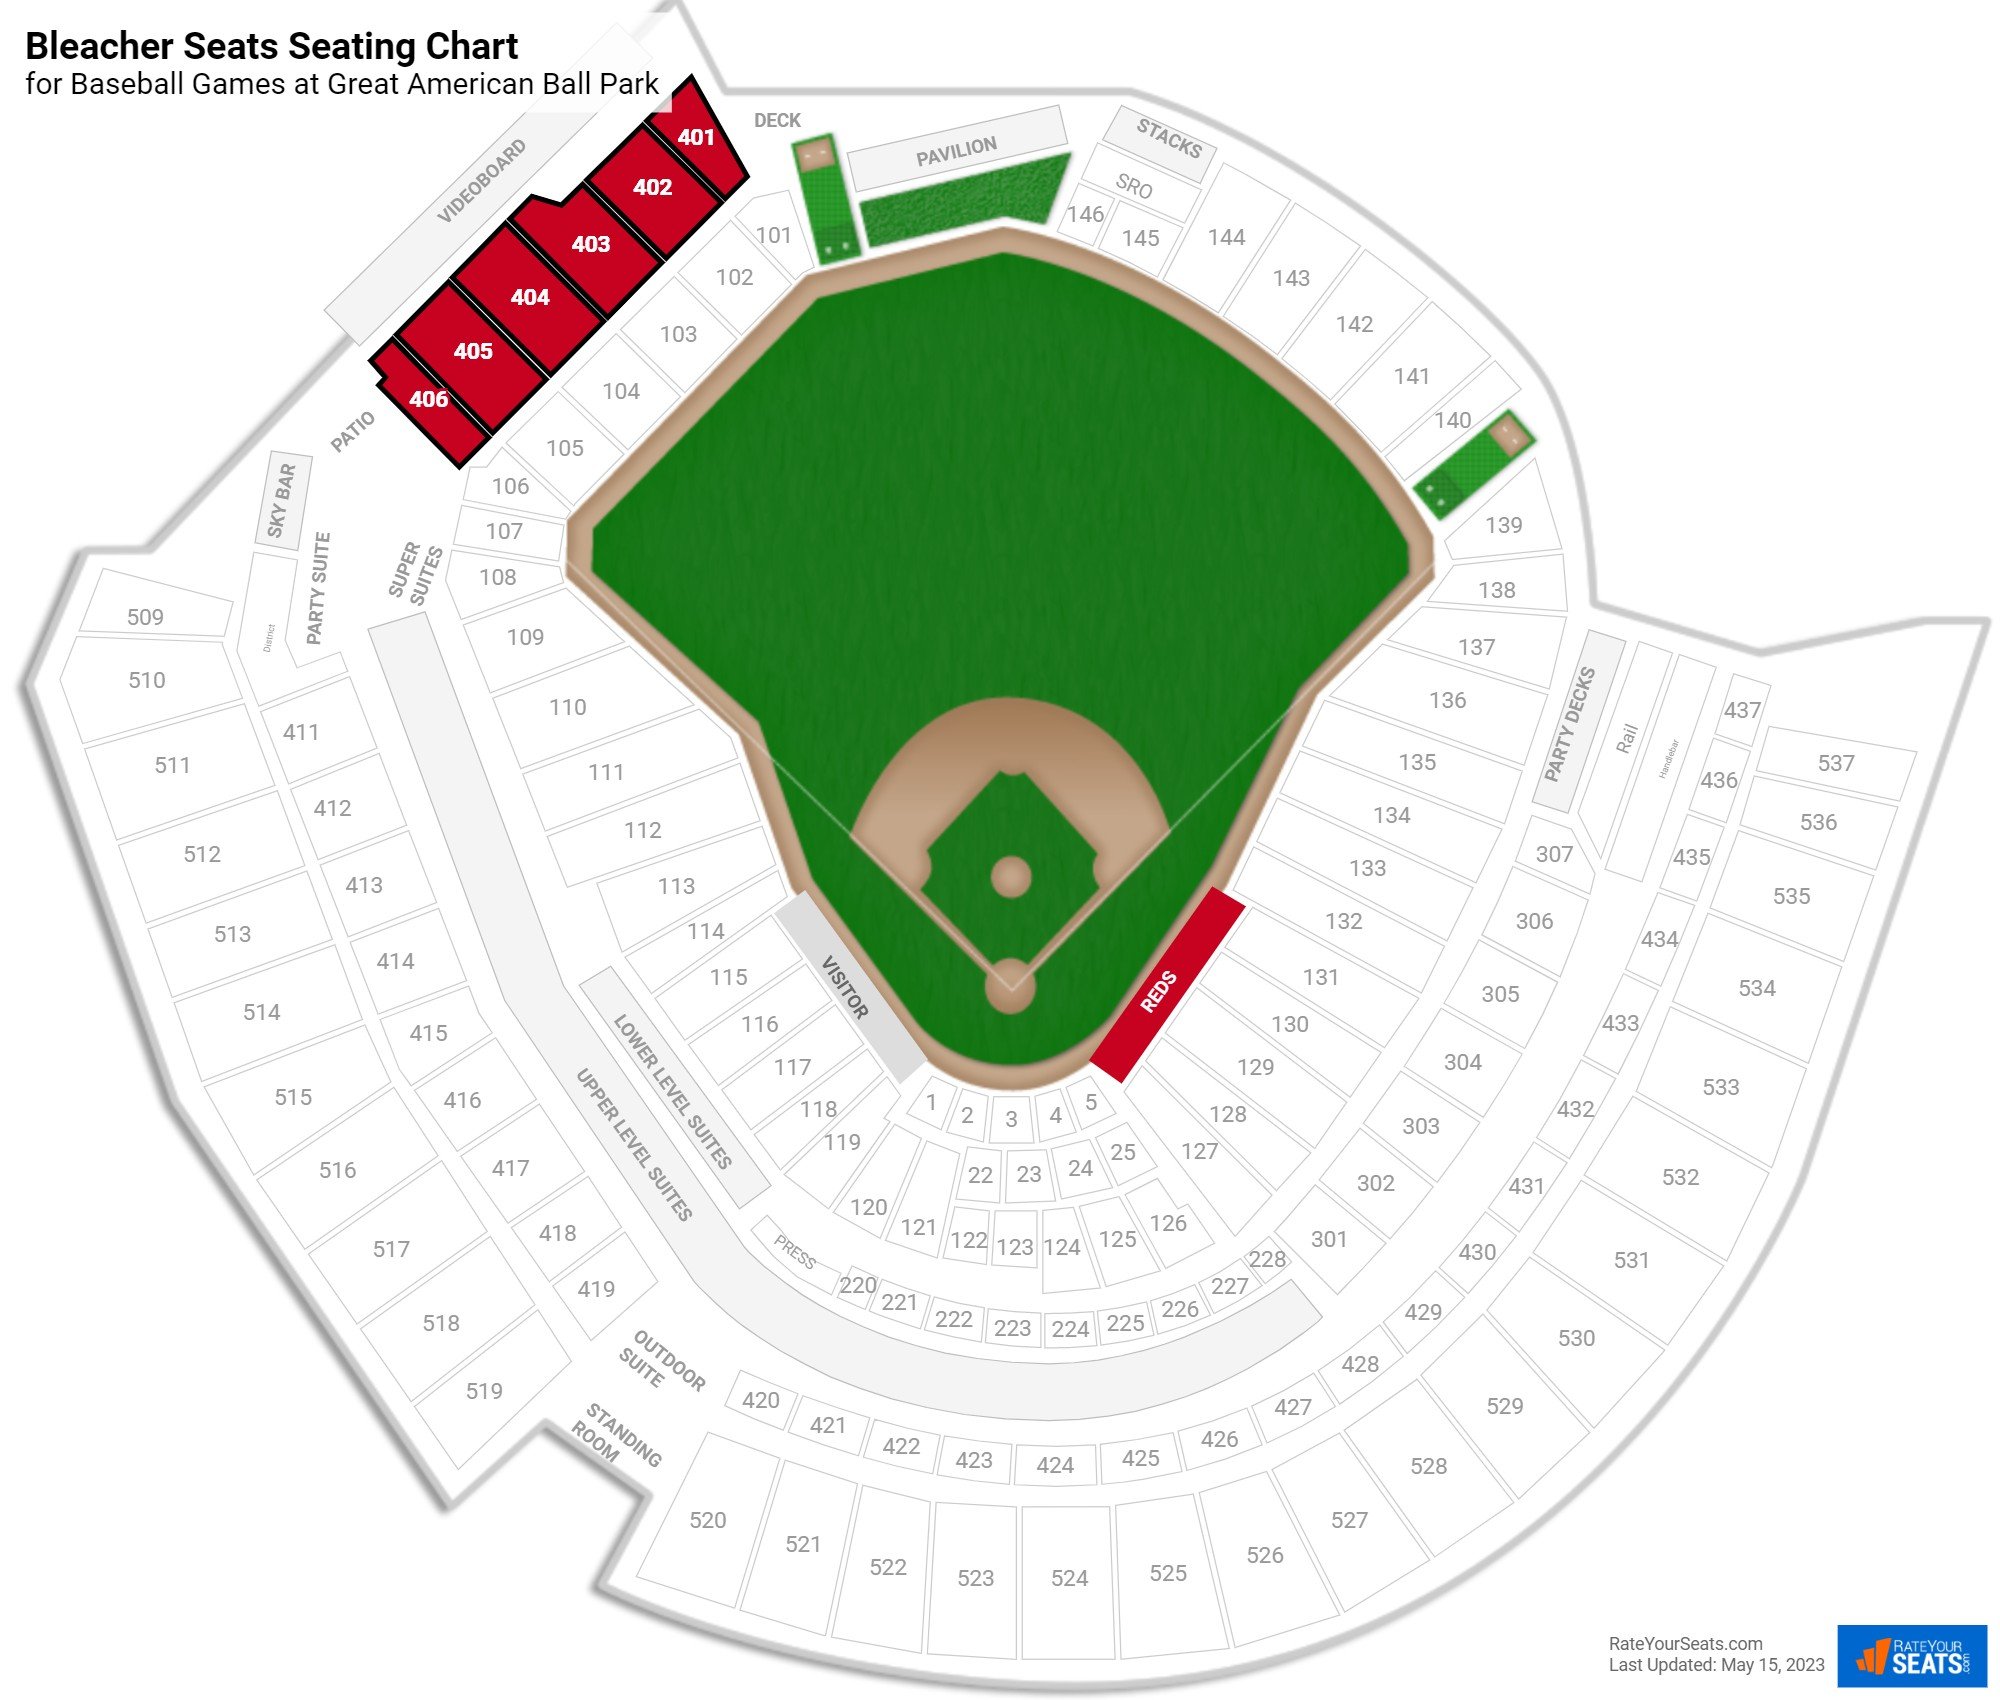 Baseball Bleacher Seats Seating Chart at Great American Ball Park